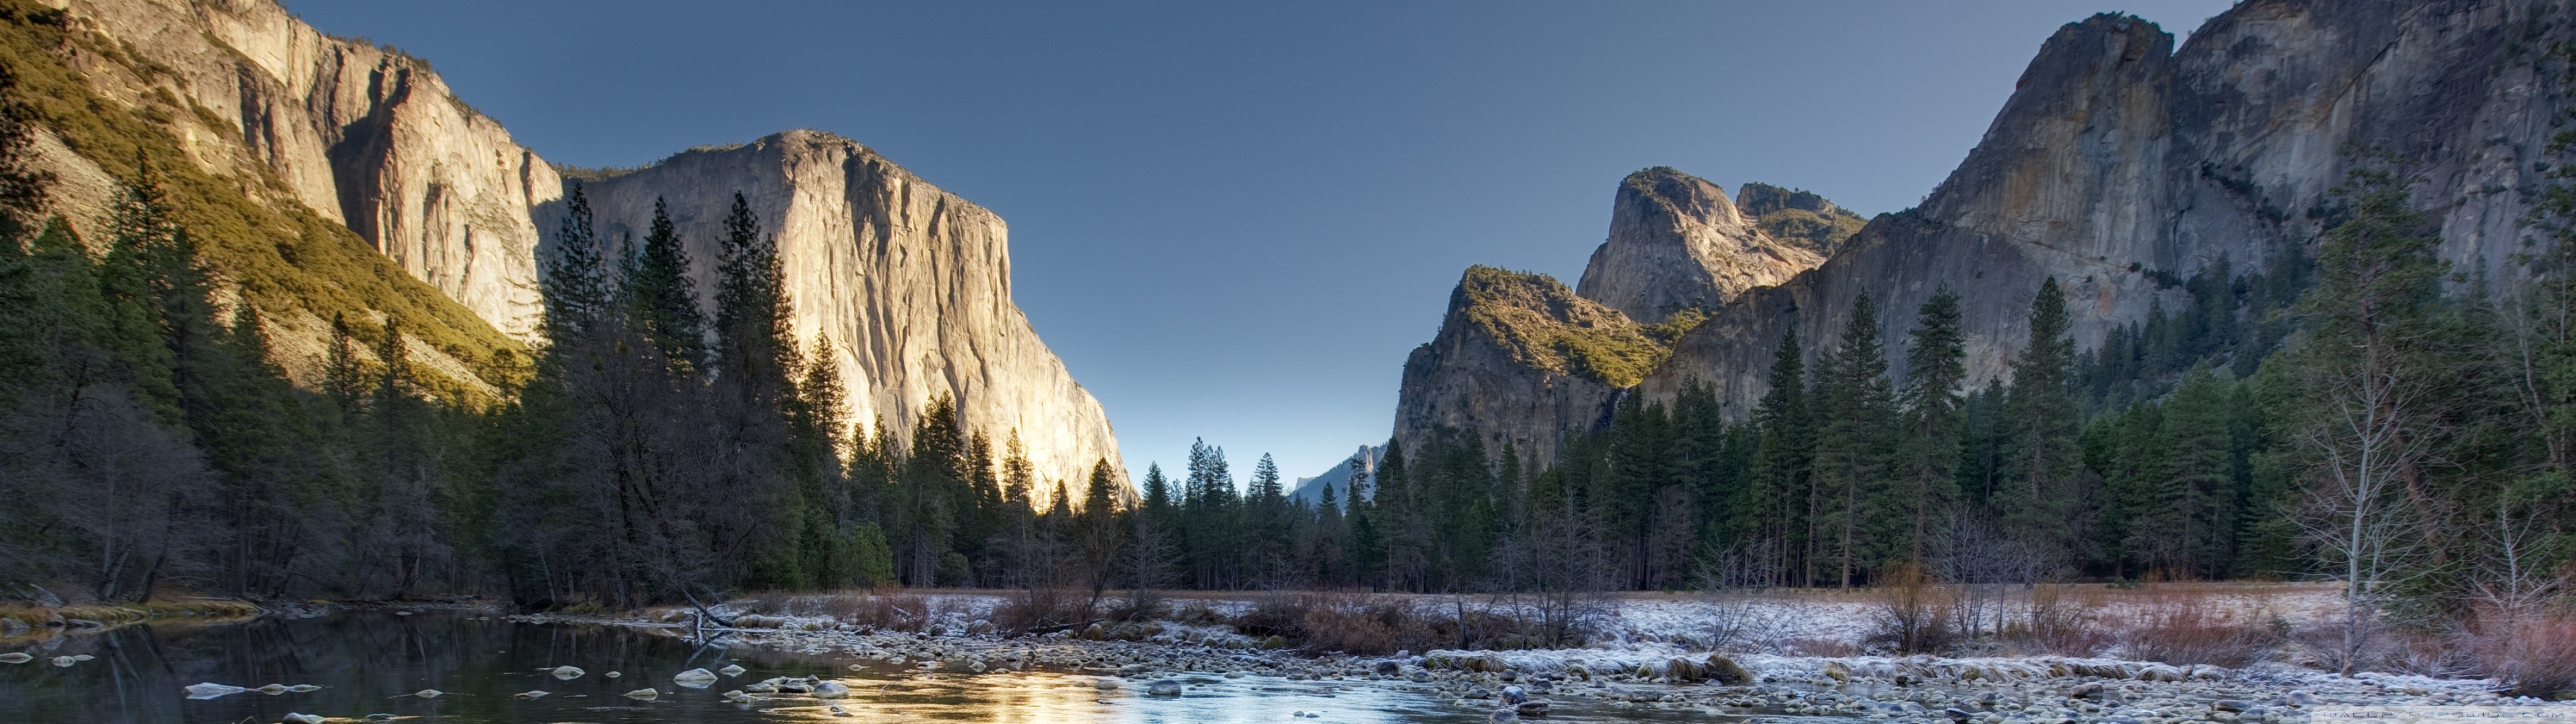 General 3840x1080 multiple display landscape Yosemite National Park nature USA rock formation California